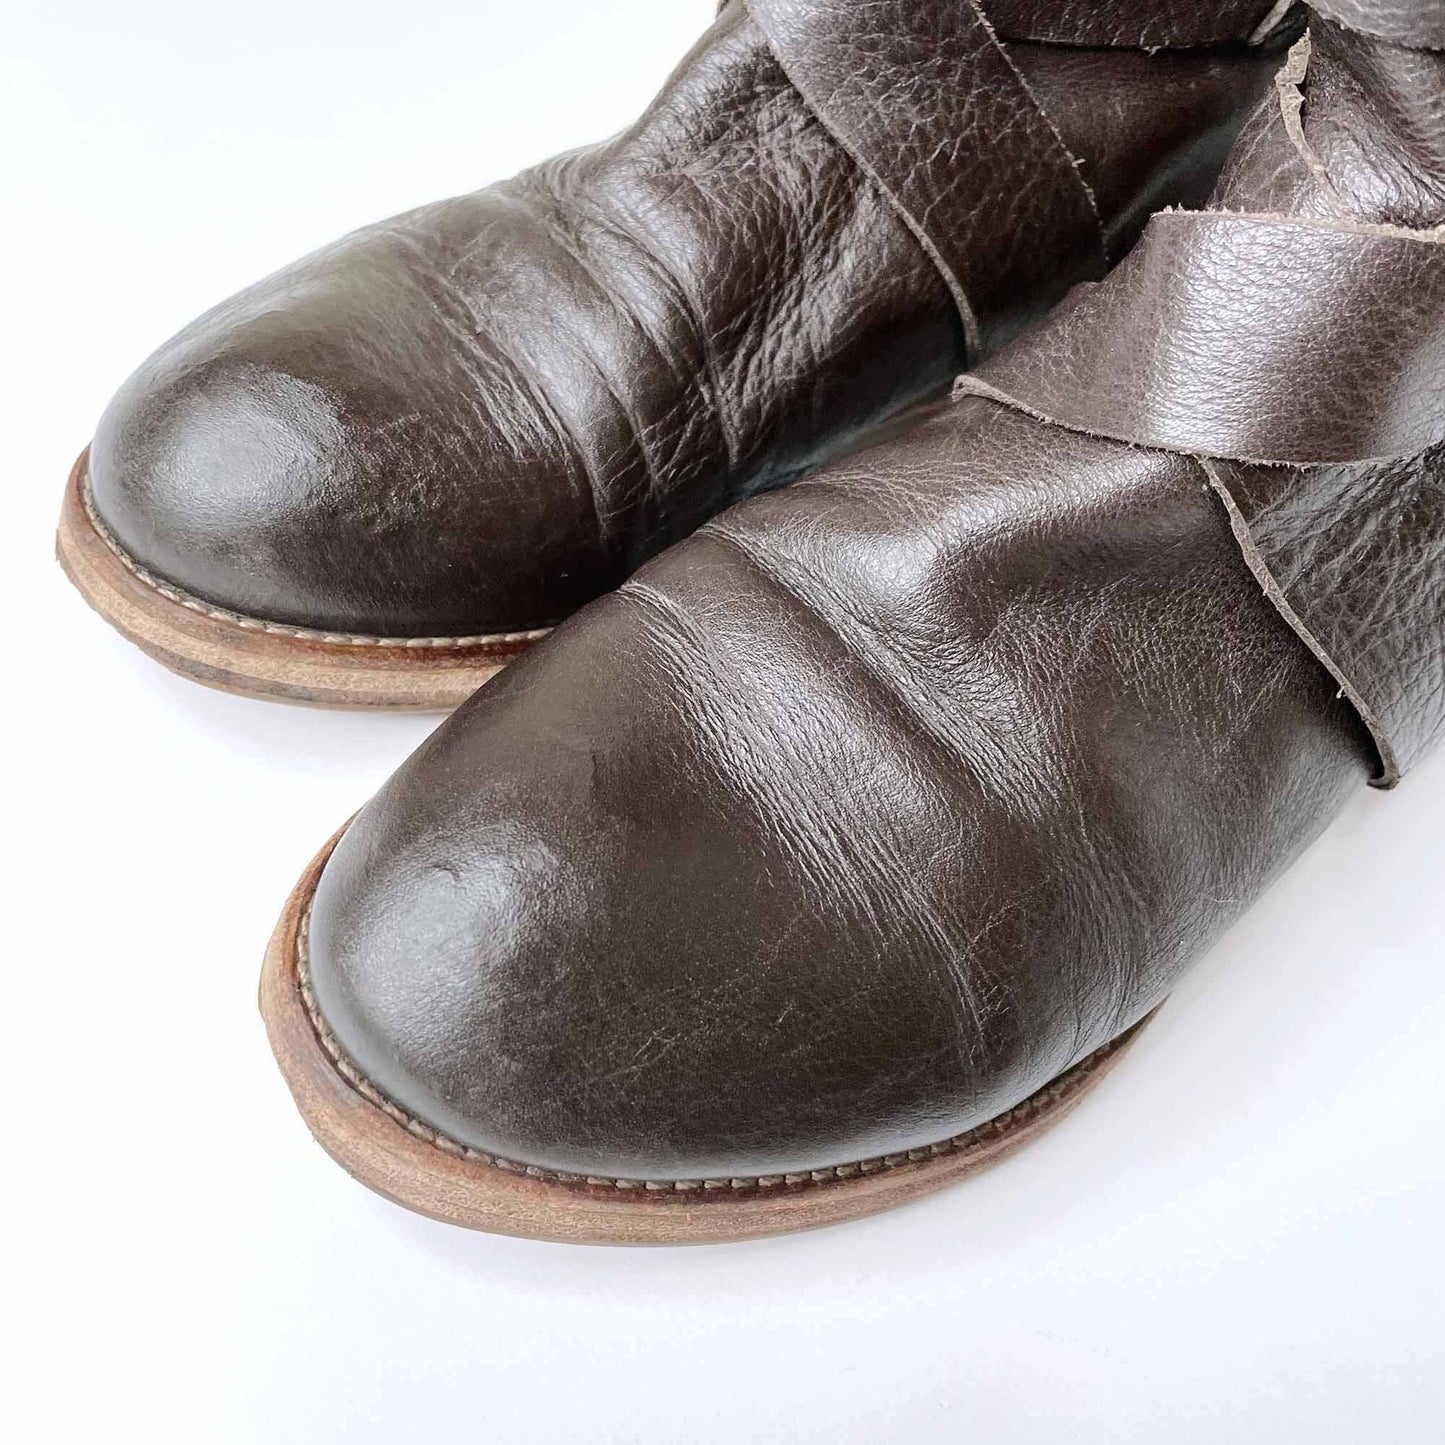 chloe prince paddington knee high leather riding boots - size 37.5